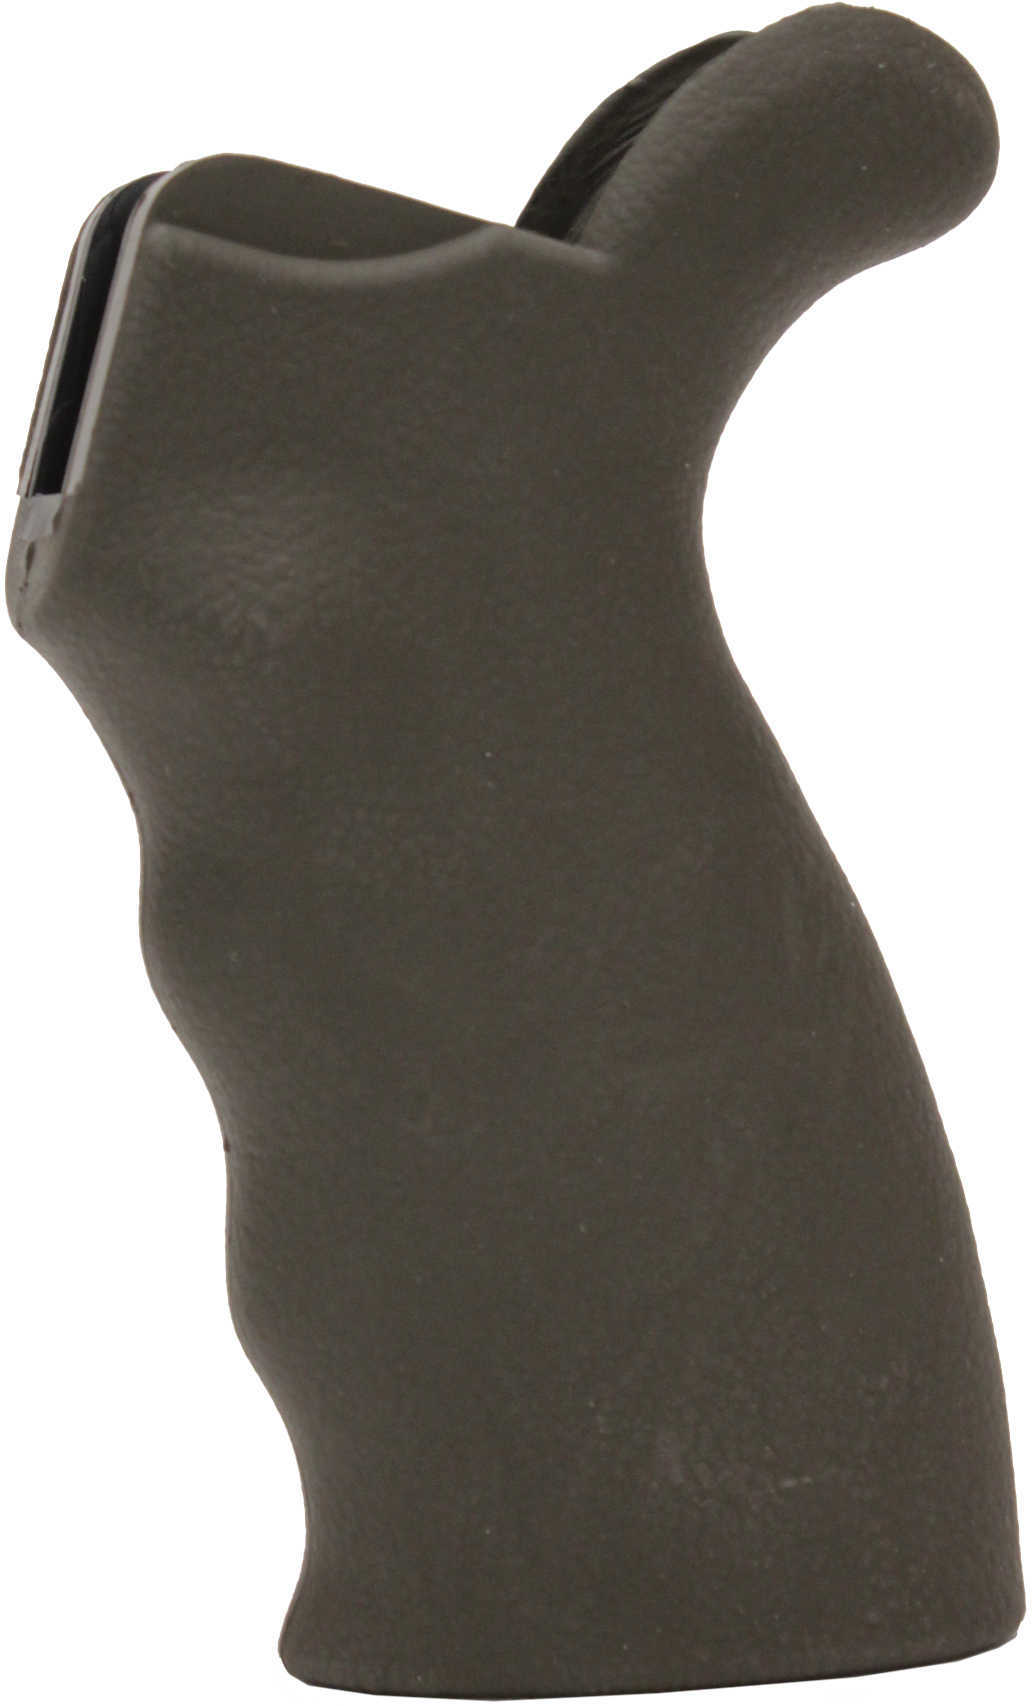 Ergo 2 AR15/AR10 Grip Kit Ambidextrous Olive Drab 4010-OD